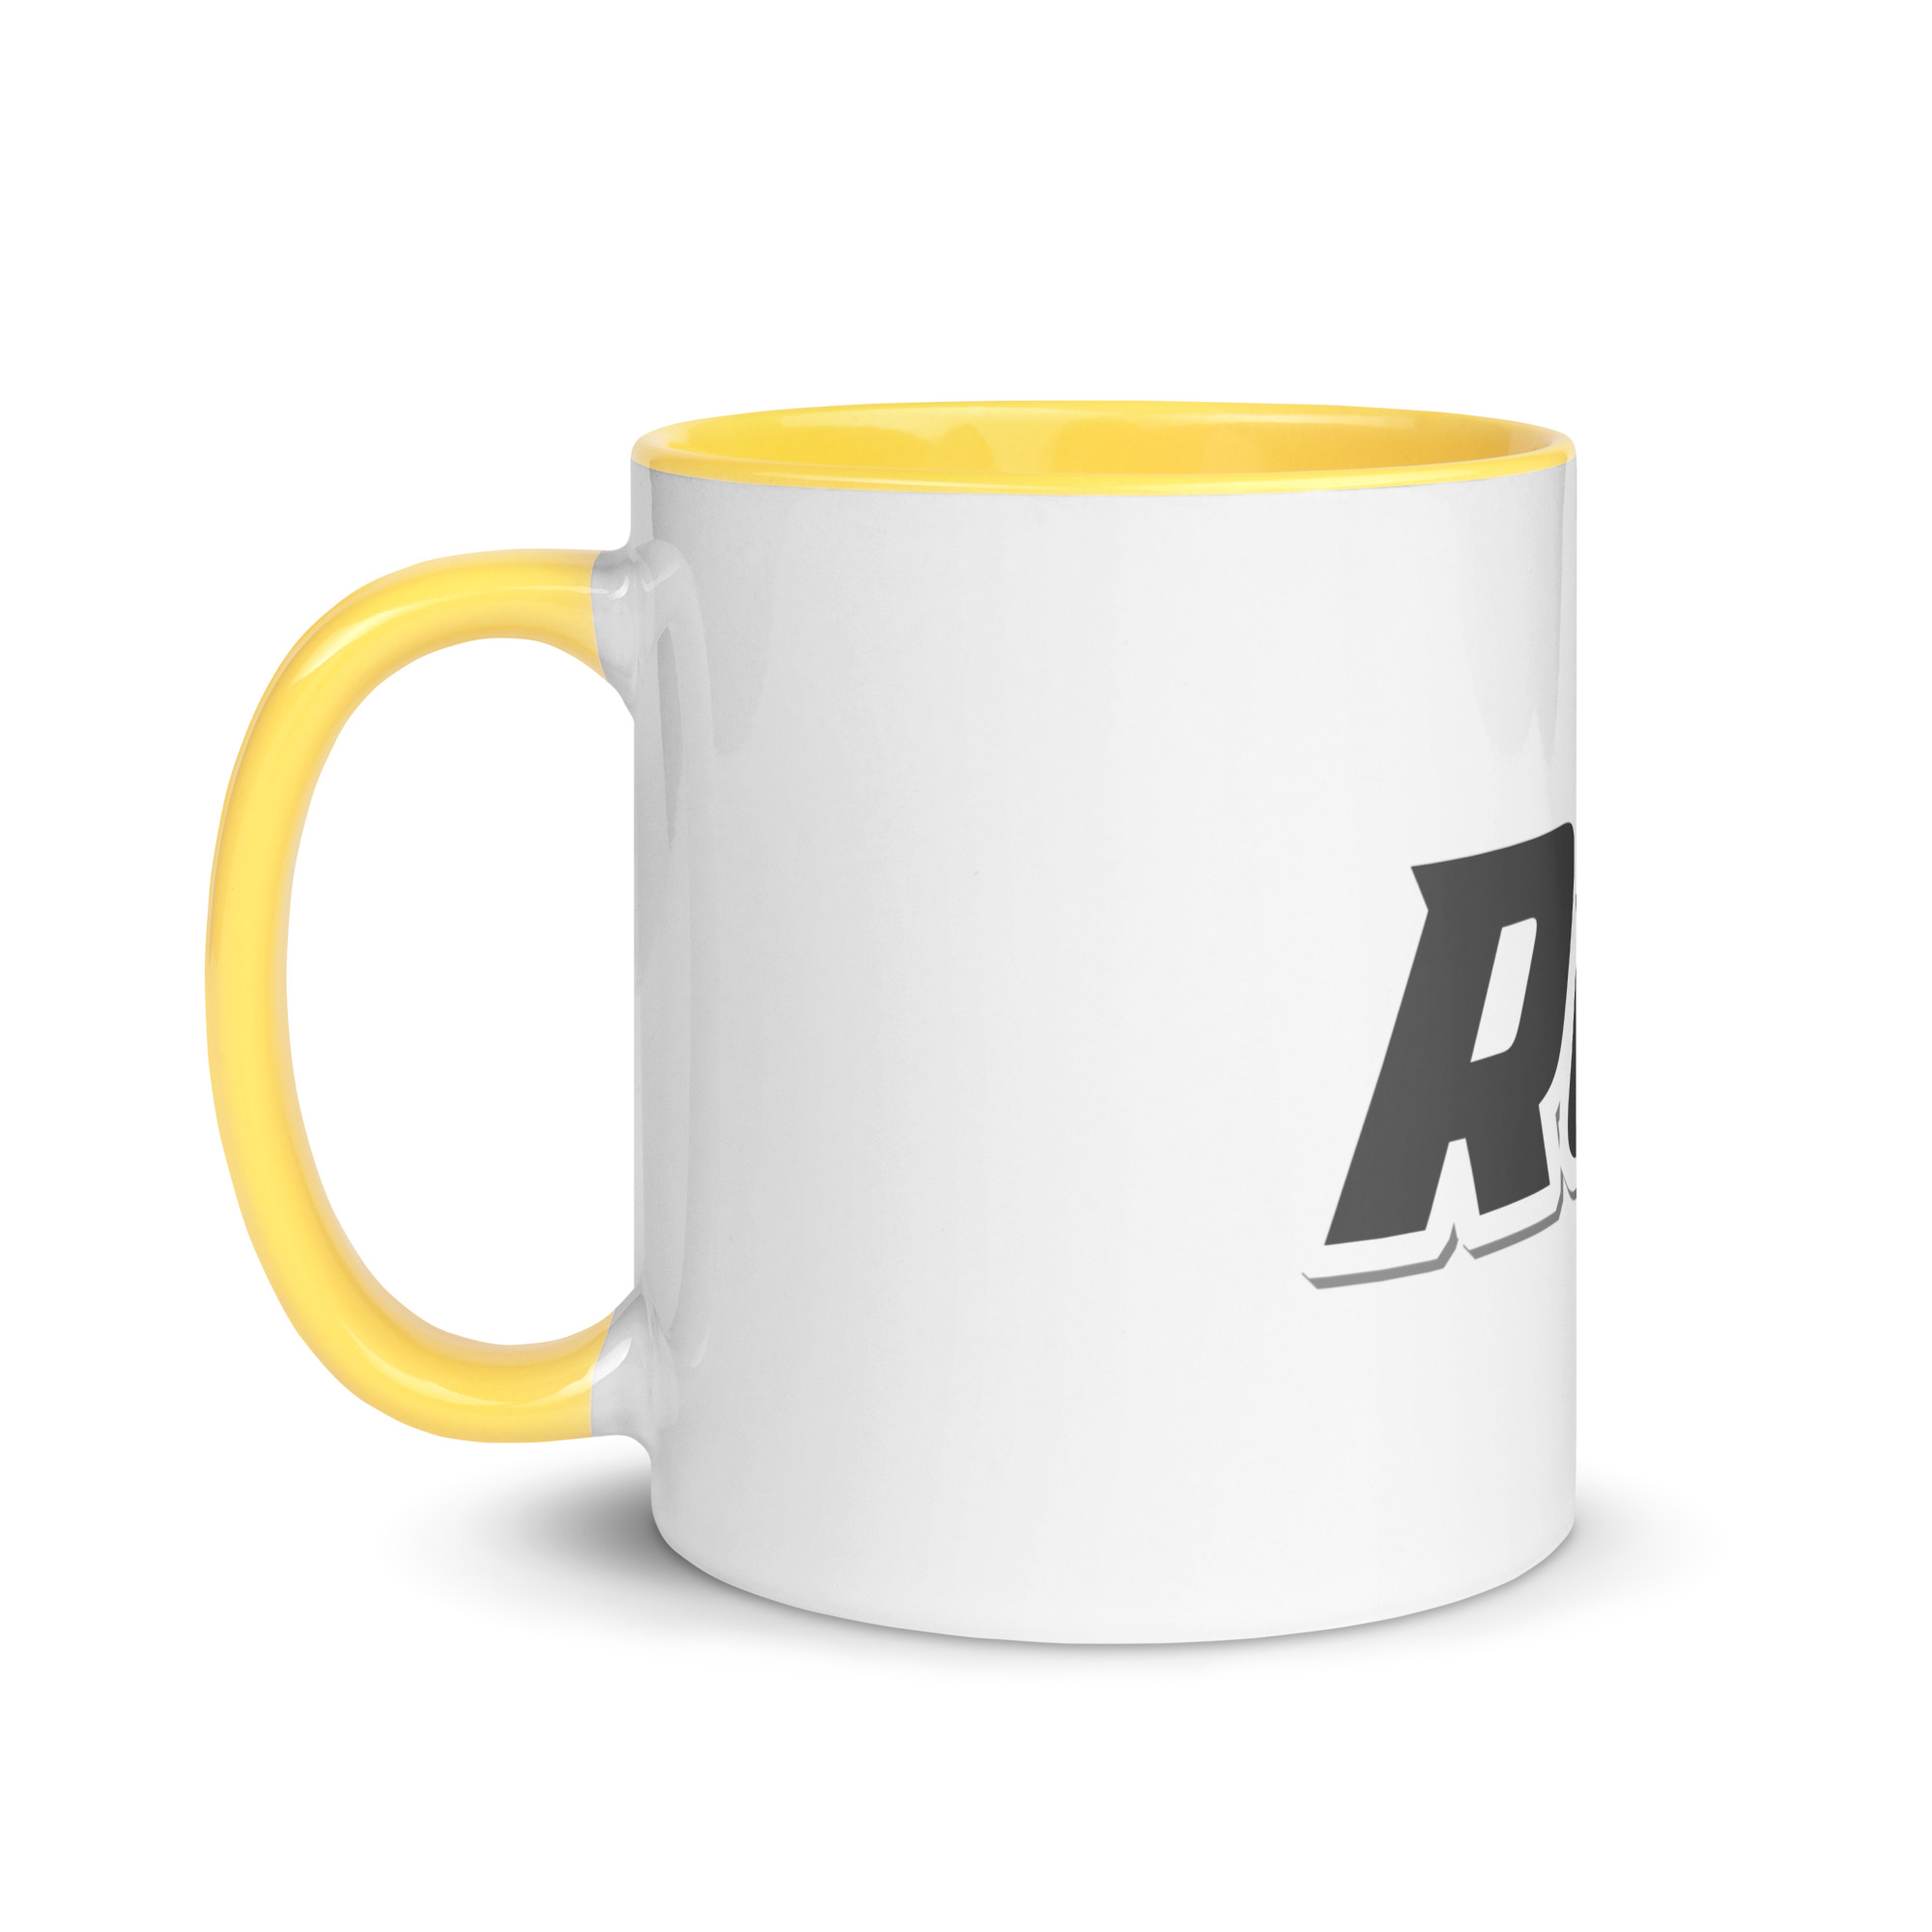 white-ceramic-mug-with-color-inside-yellow-11-oz-left-6525b6484cd27.jpg